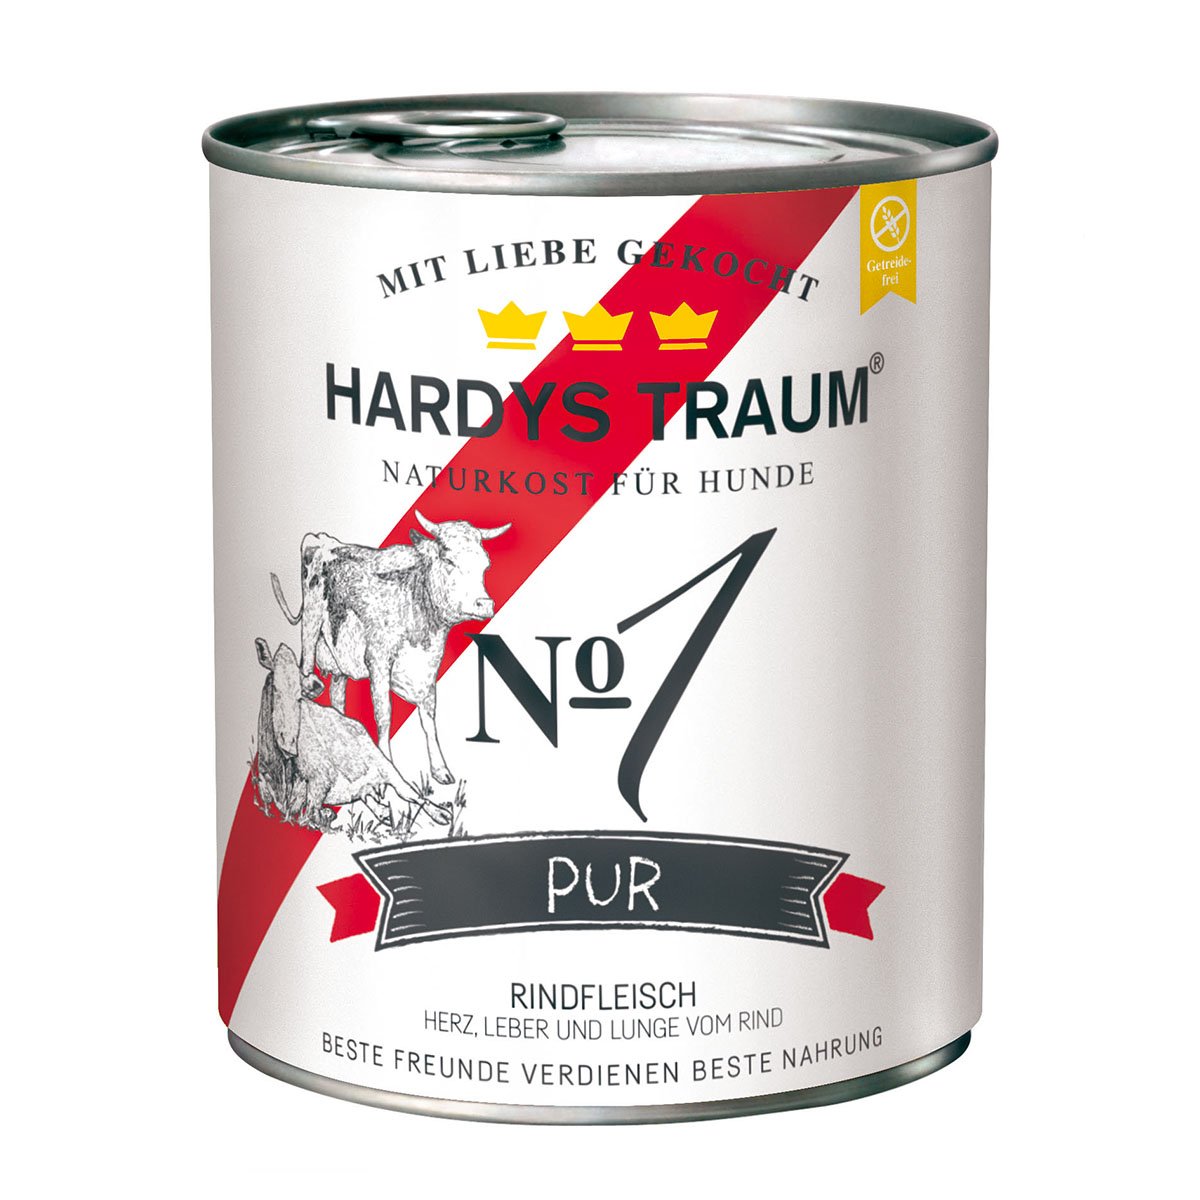 HARDYS TRAUM PUR No. 1 - Rind -, 1 x 800 g - glücksthaler.ch